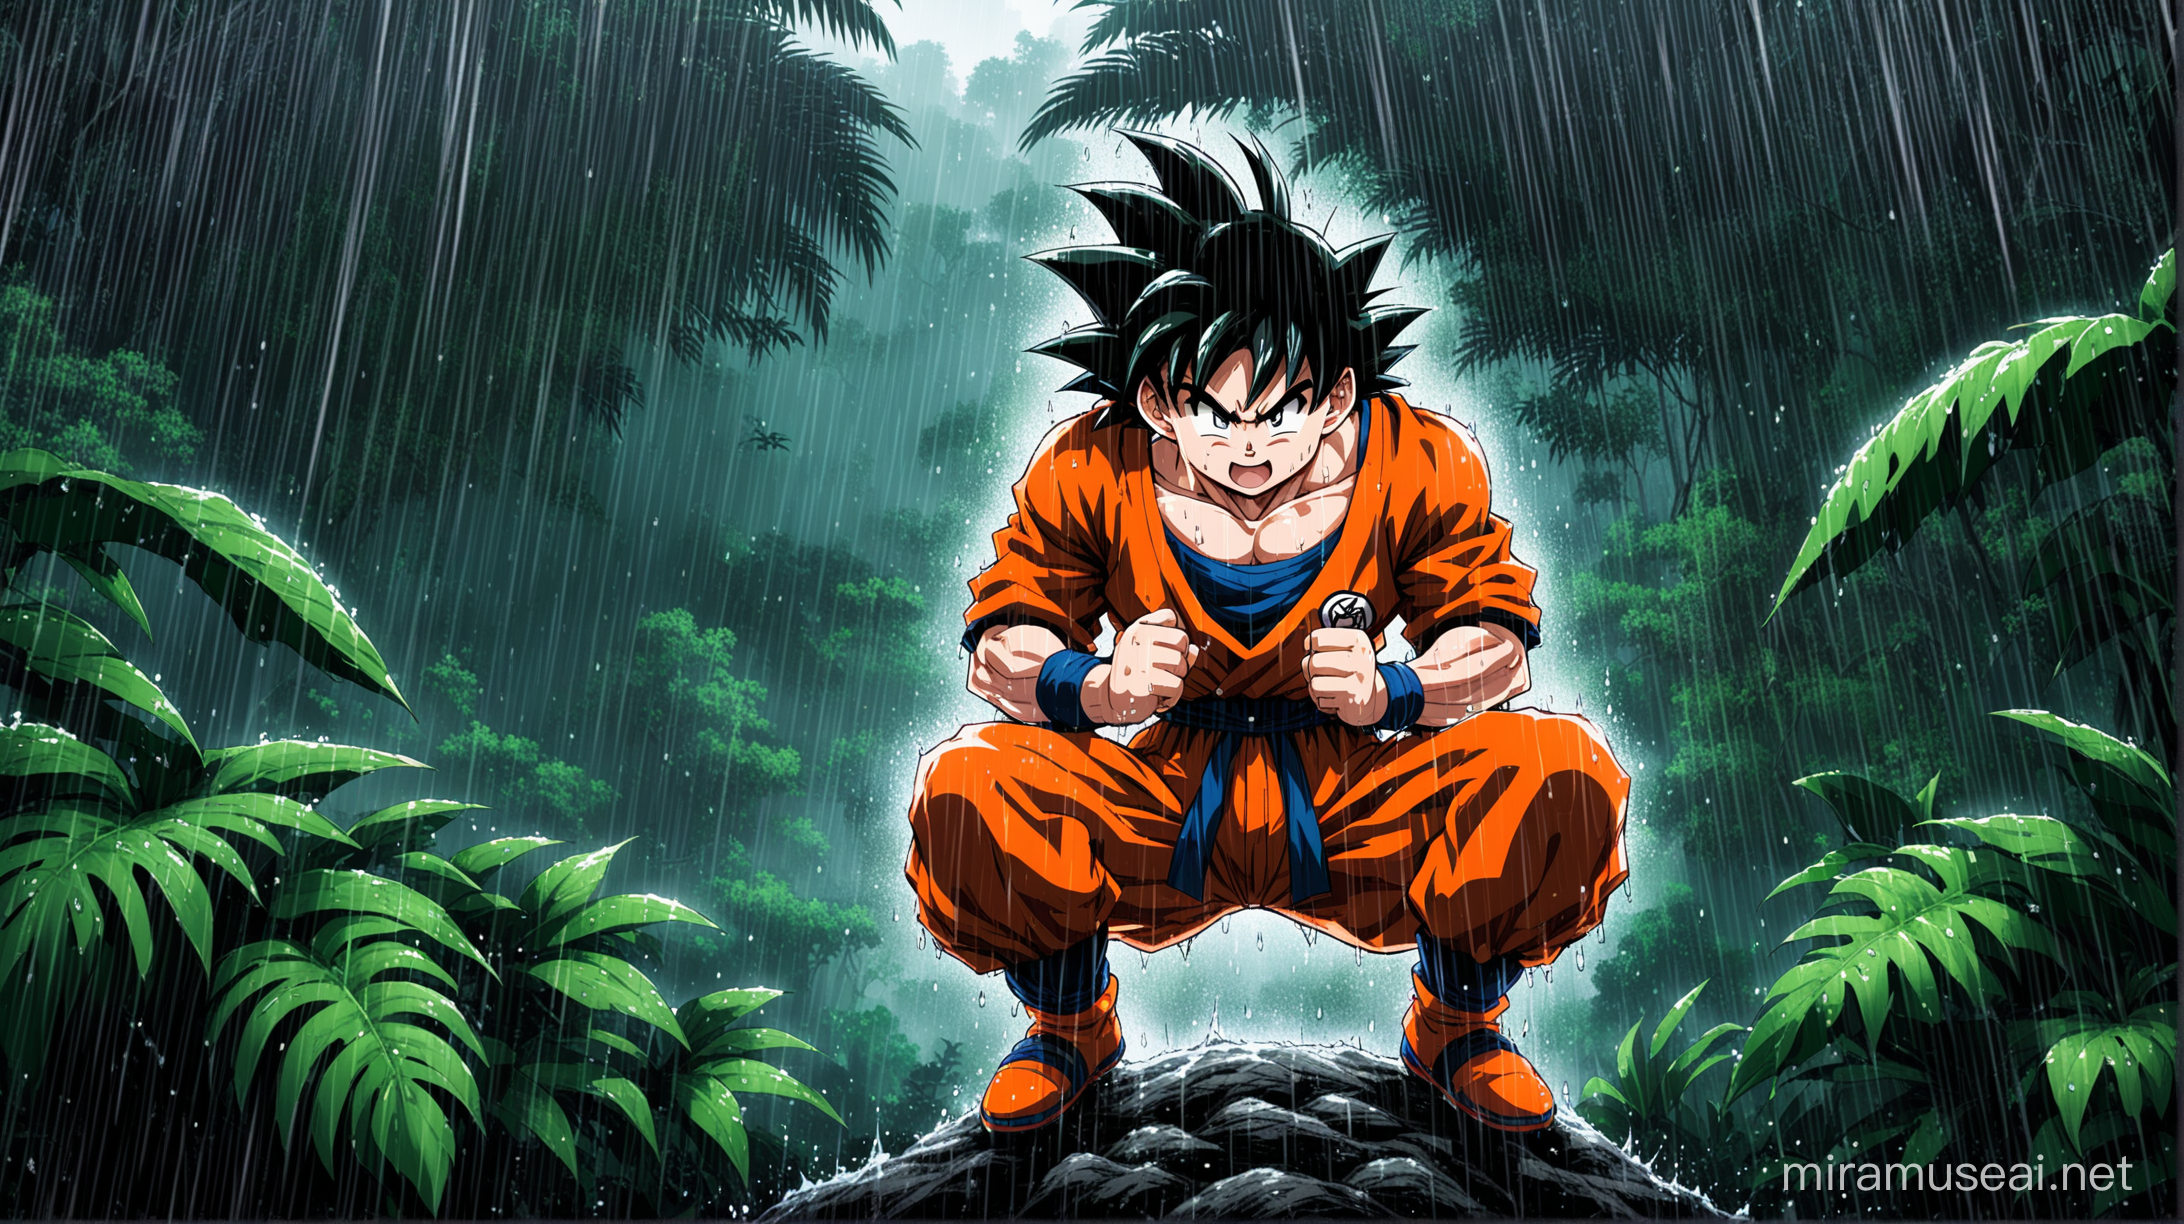 Goku in Rainy Jungle Battling the Elements